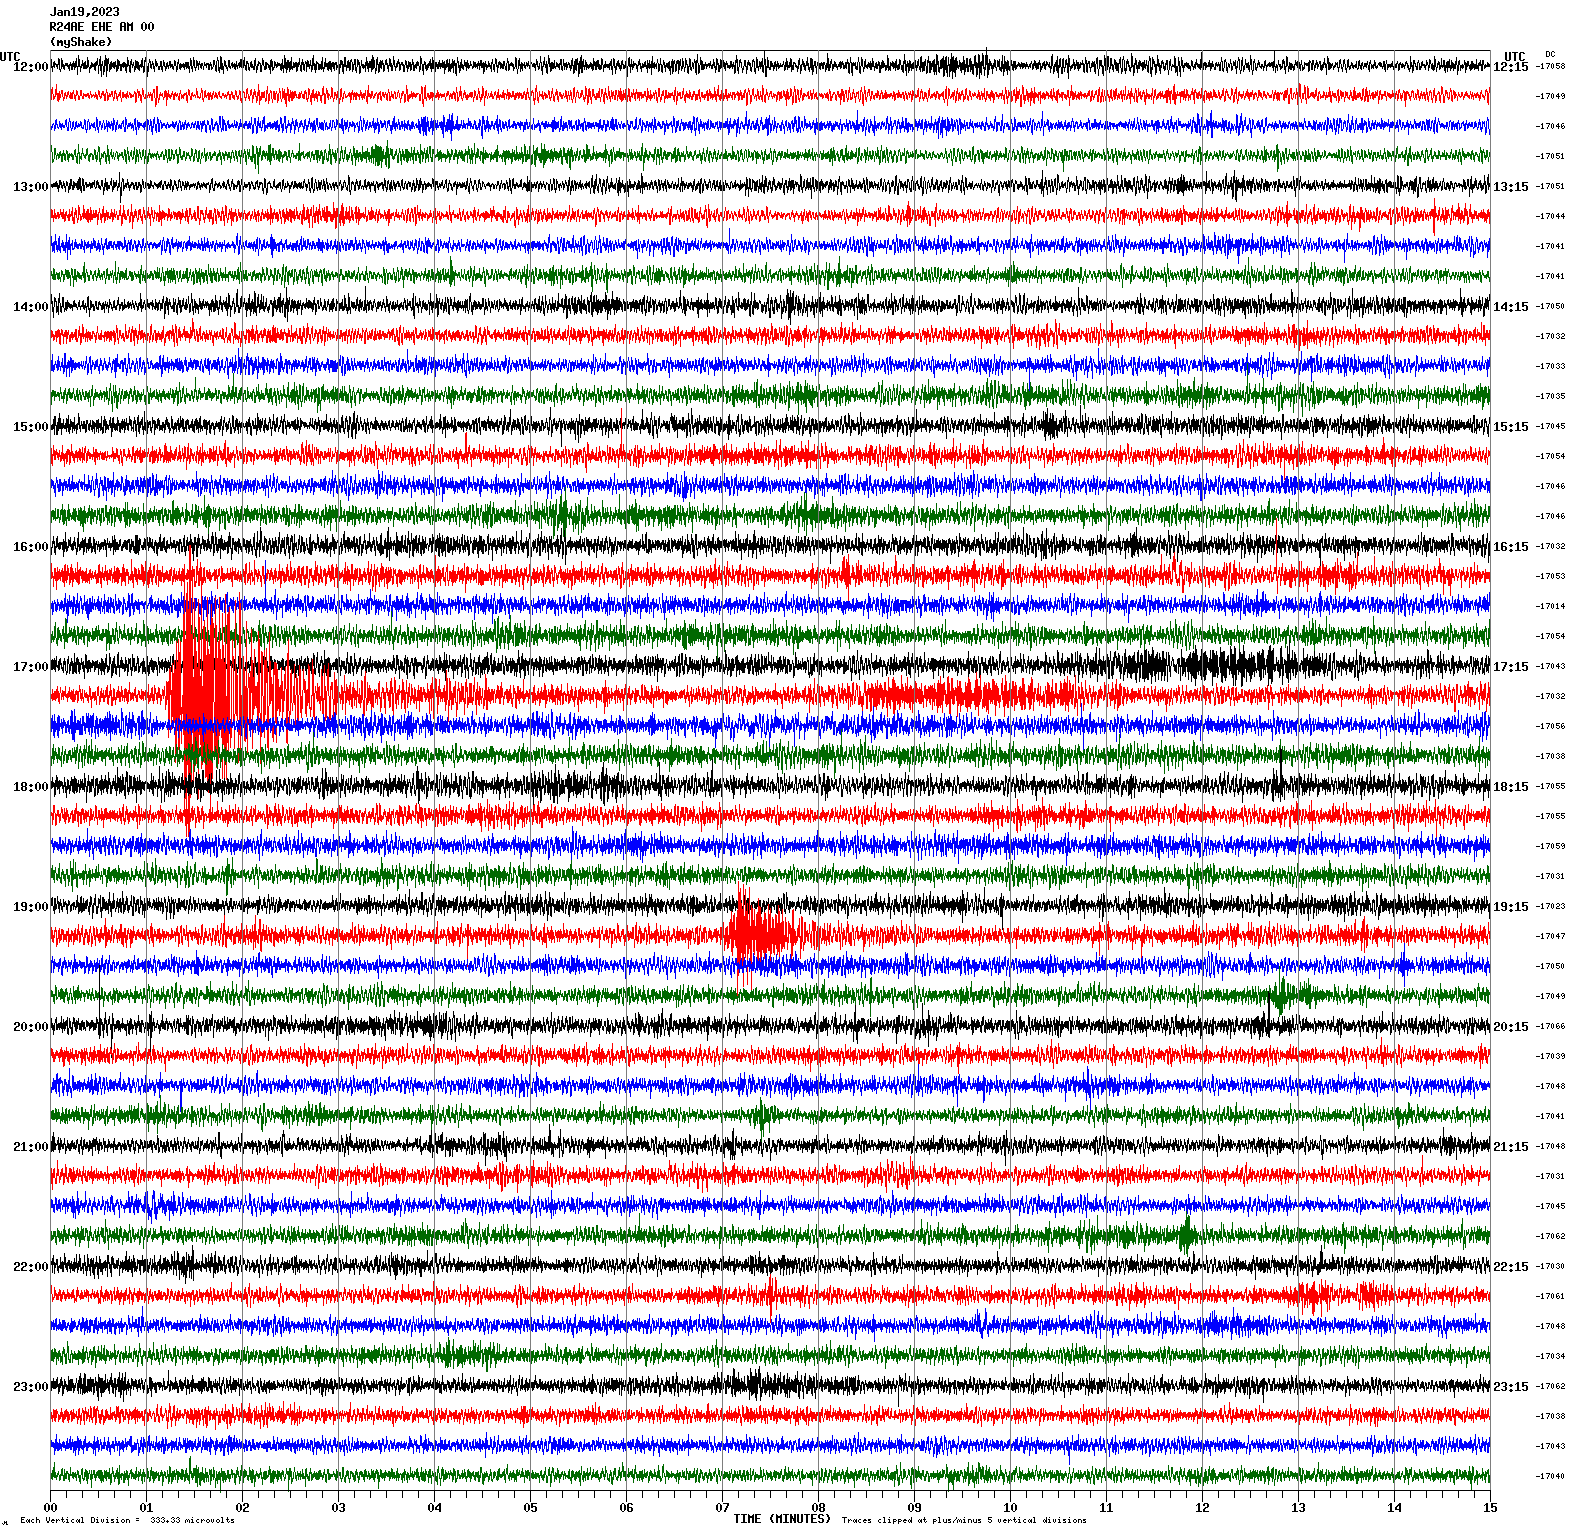 /seismic-data/R24AE/R24AE_EHE_AM_00.2023011912.gif